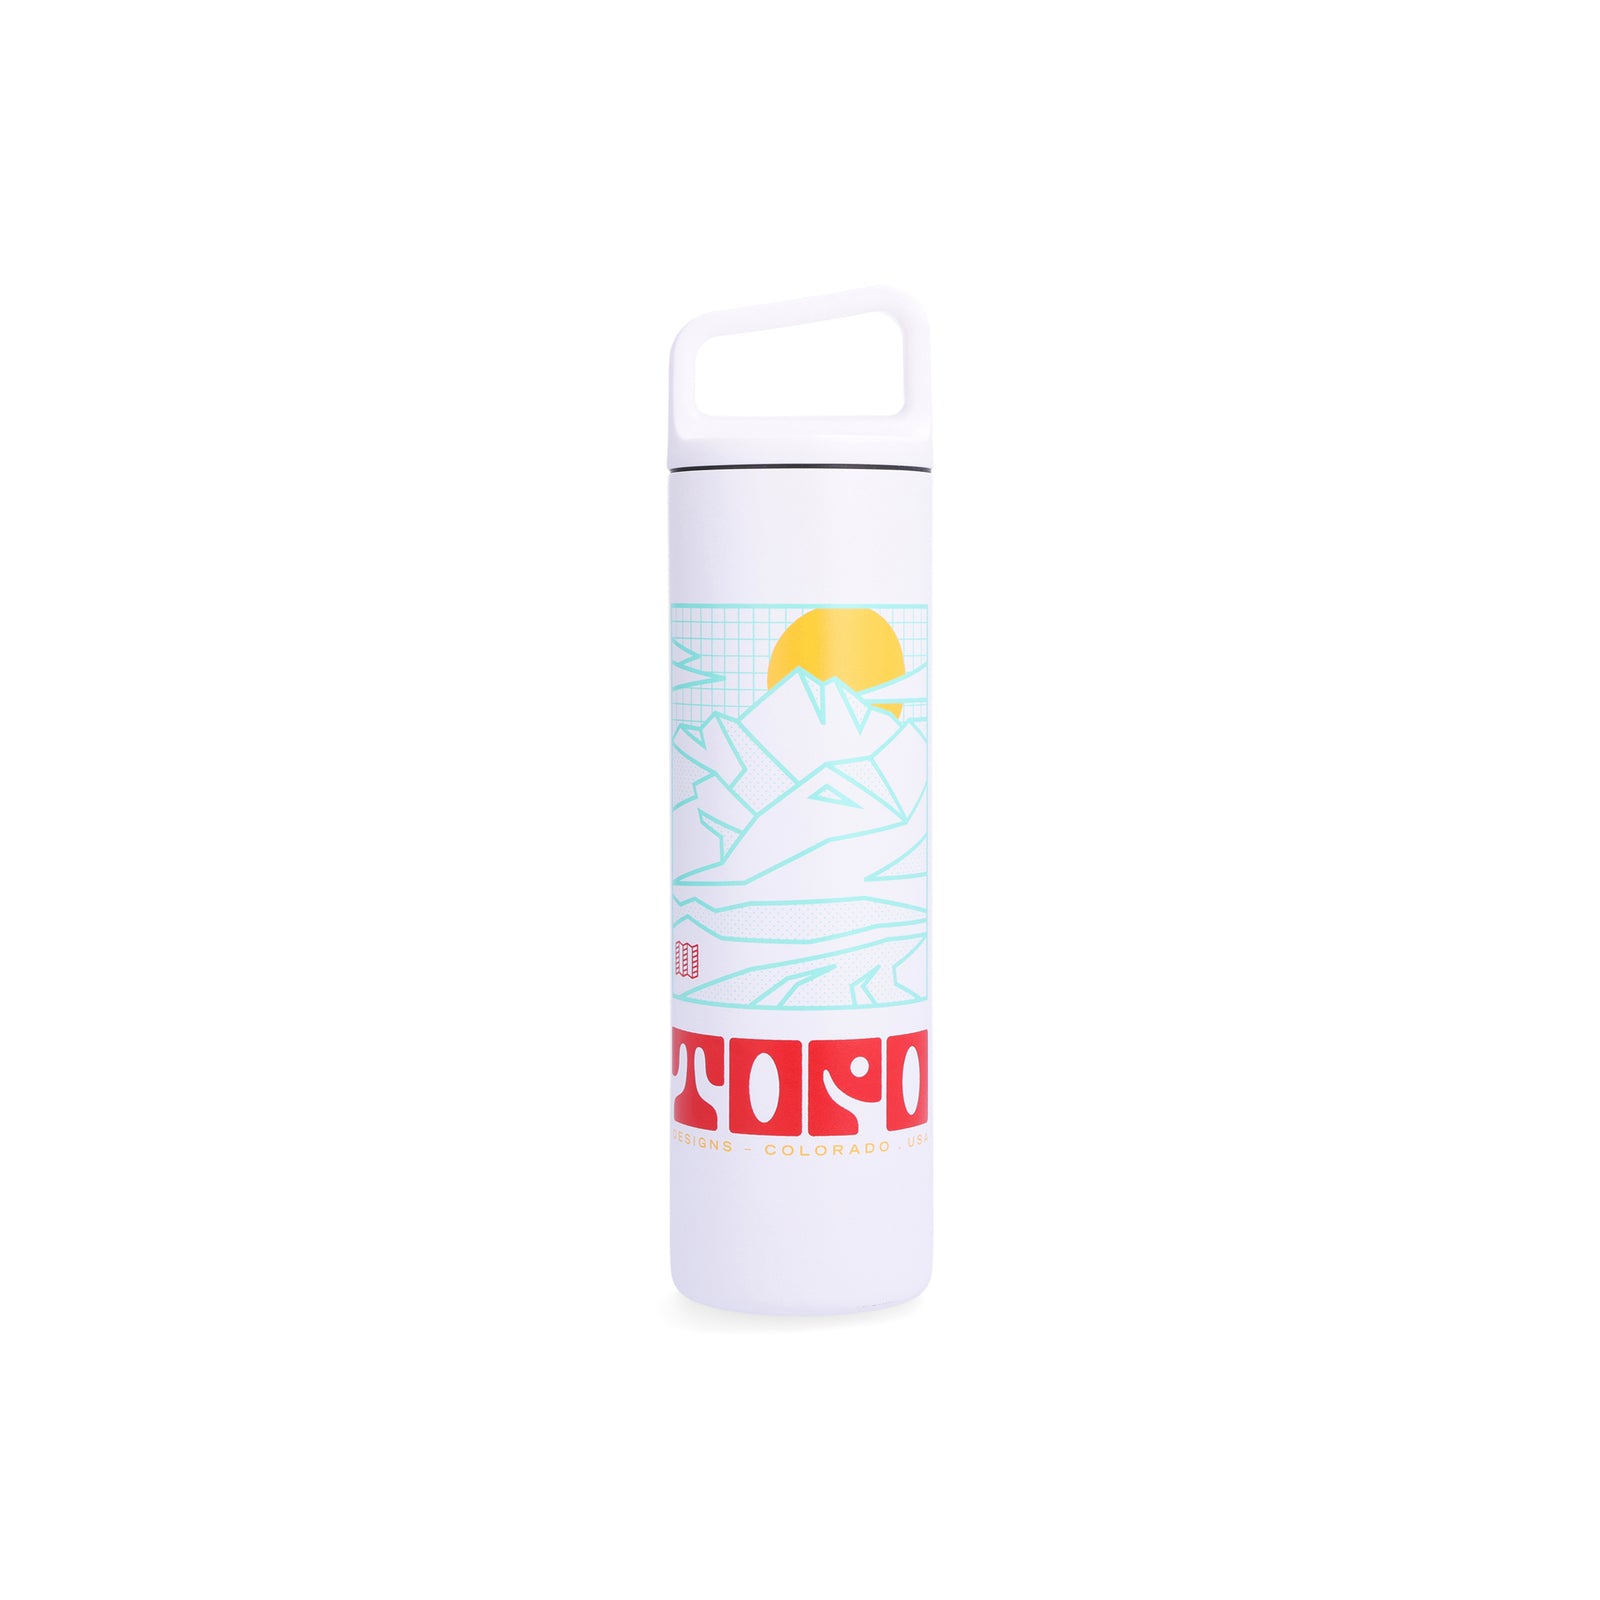 Topo Designs x Miir 20 oz Water Bottle with custom "White Arcade Mountain" graphics.